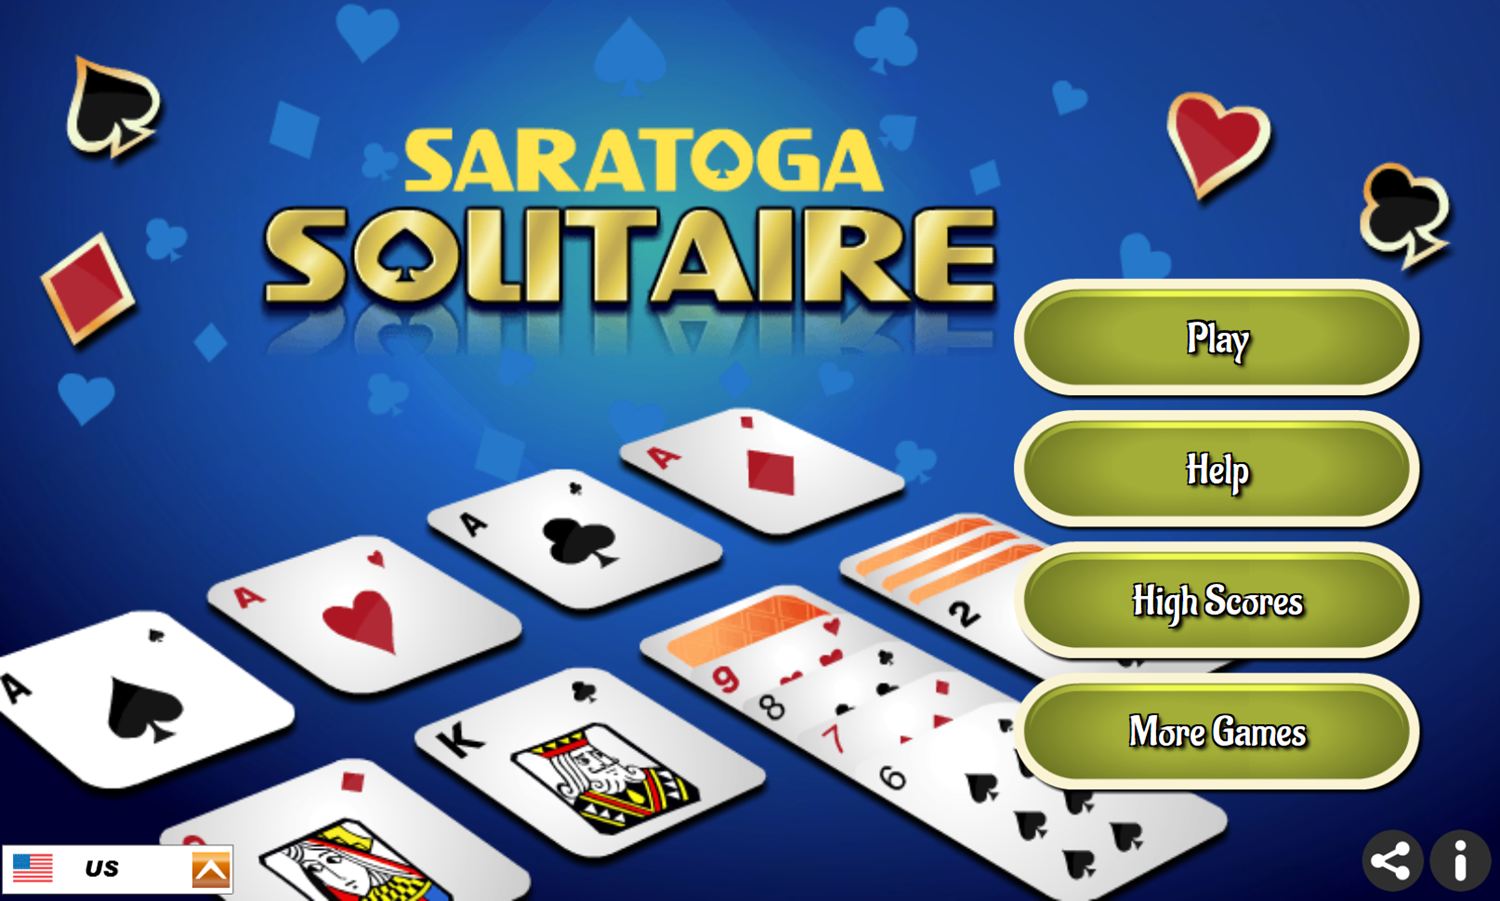 Saratoga Solitaire Game Welcome Screen Screenshot.